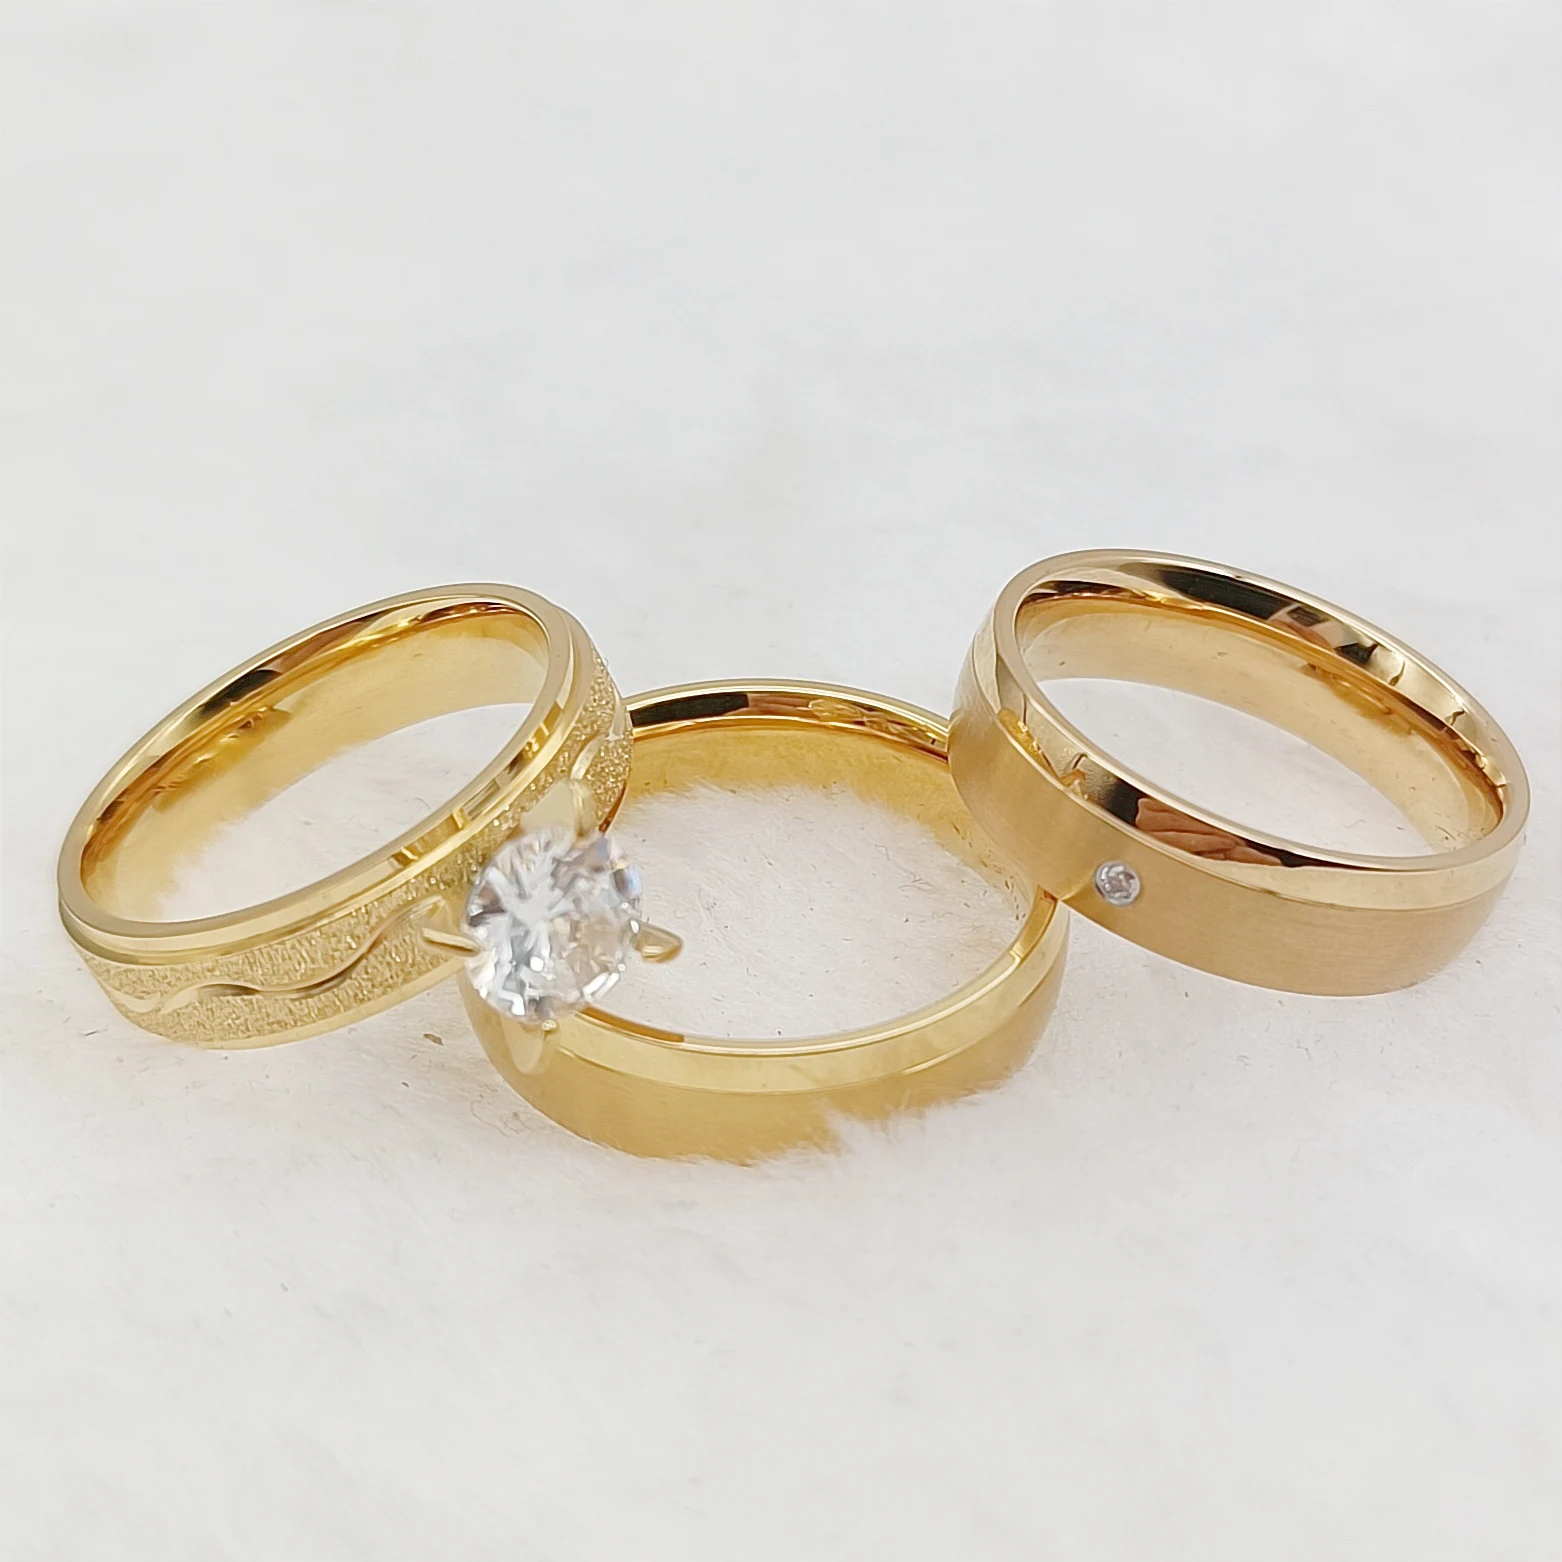 bmz good-quality brass wedding rings gold| Alibaba.com